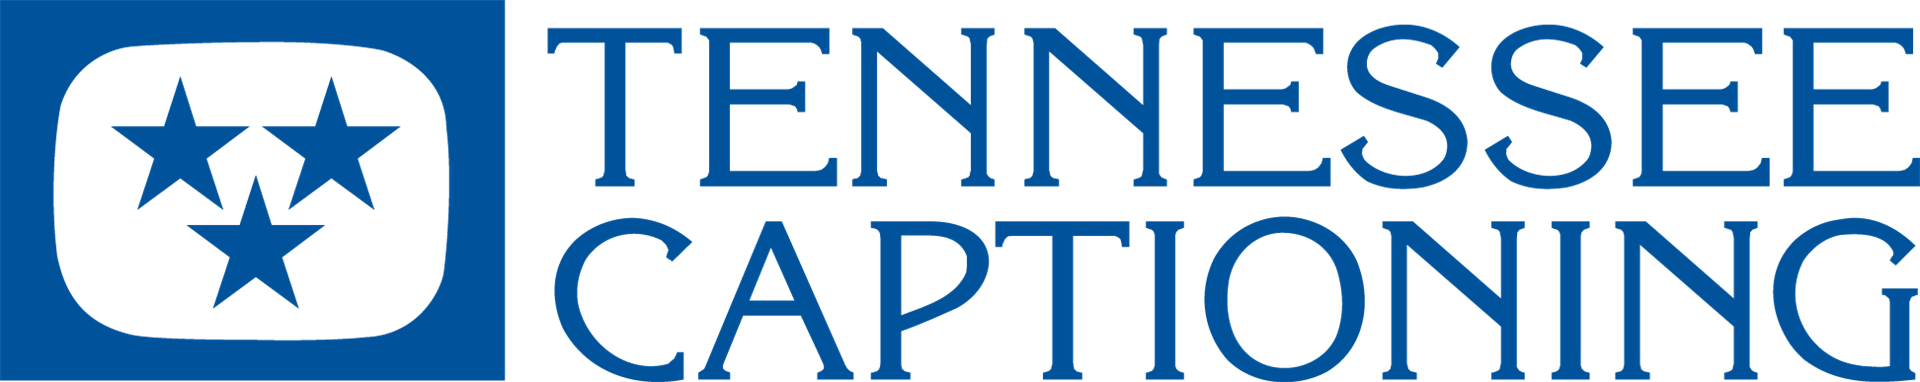 Tennessee Captioning logo